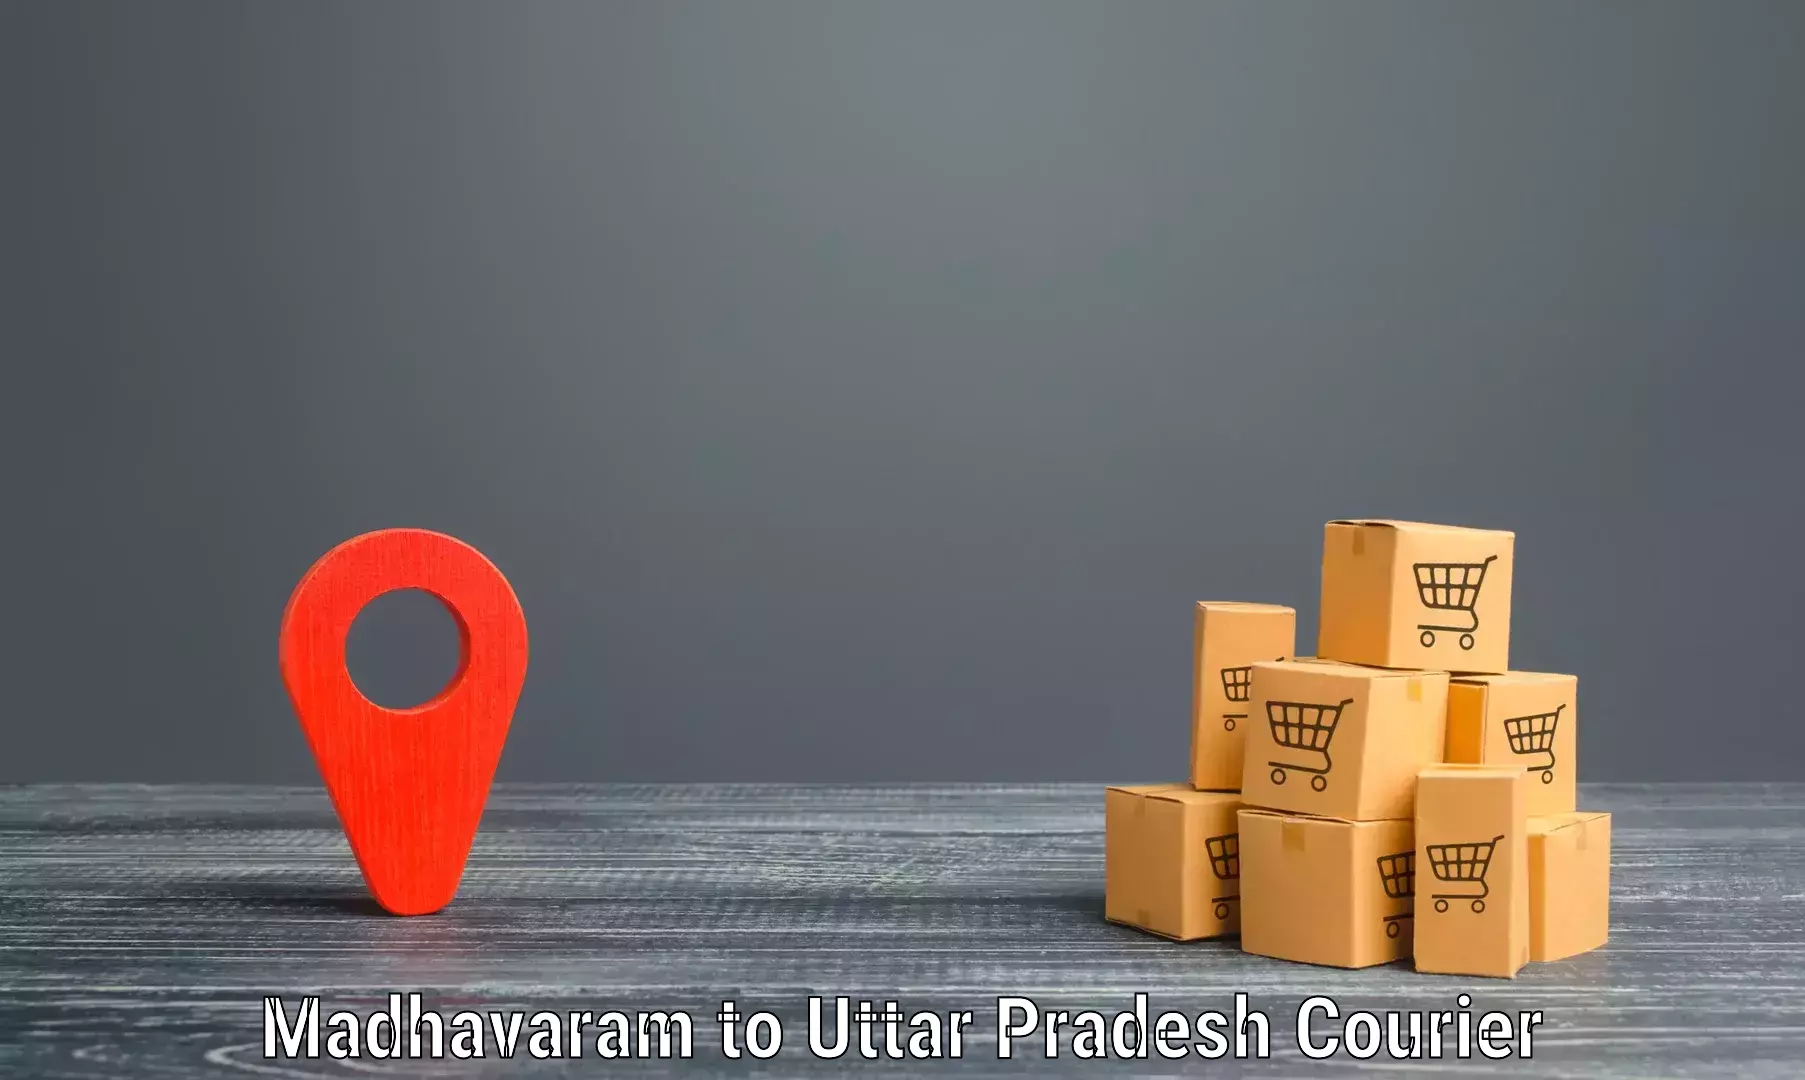 Reliable freight solutions Madhavaram to Aligarh Muslim University